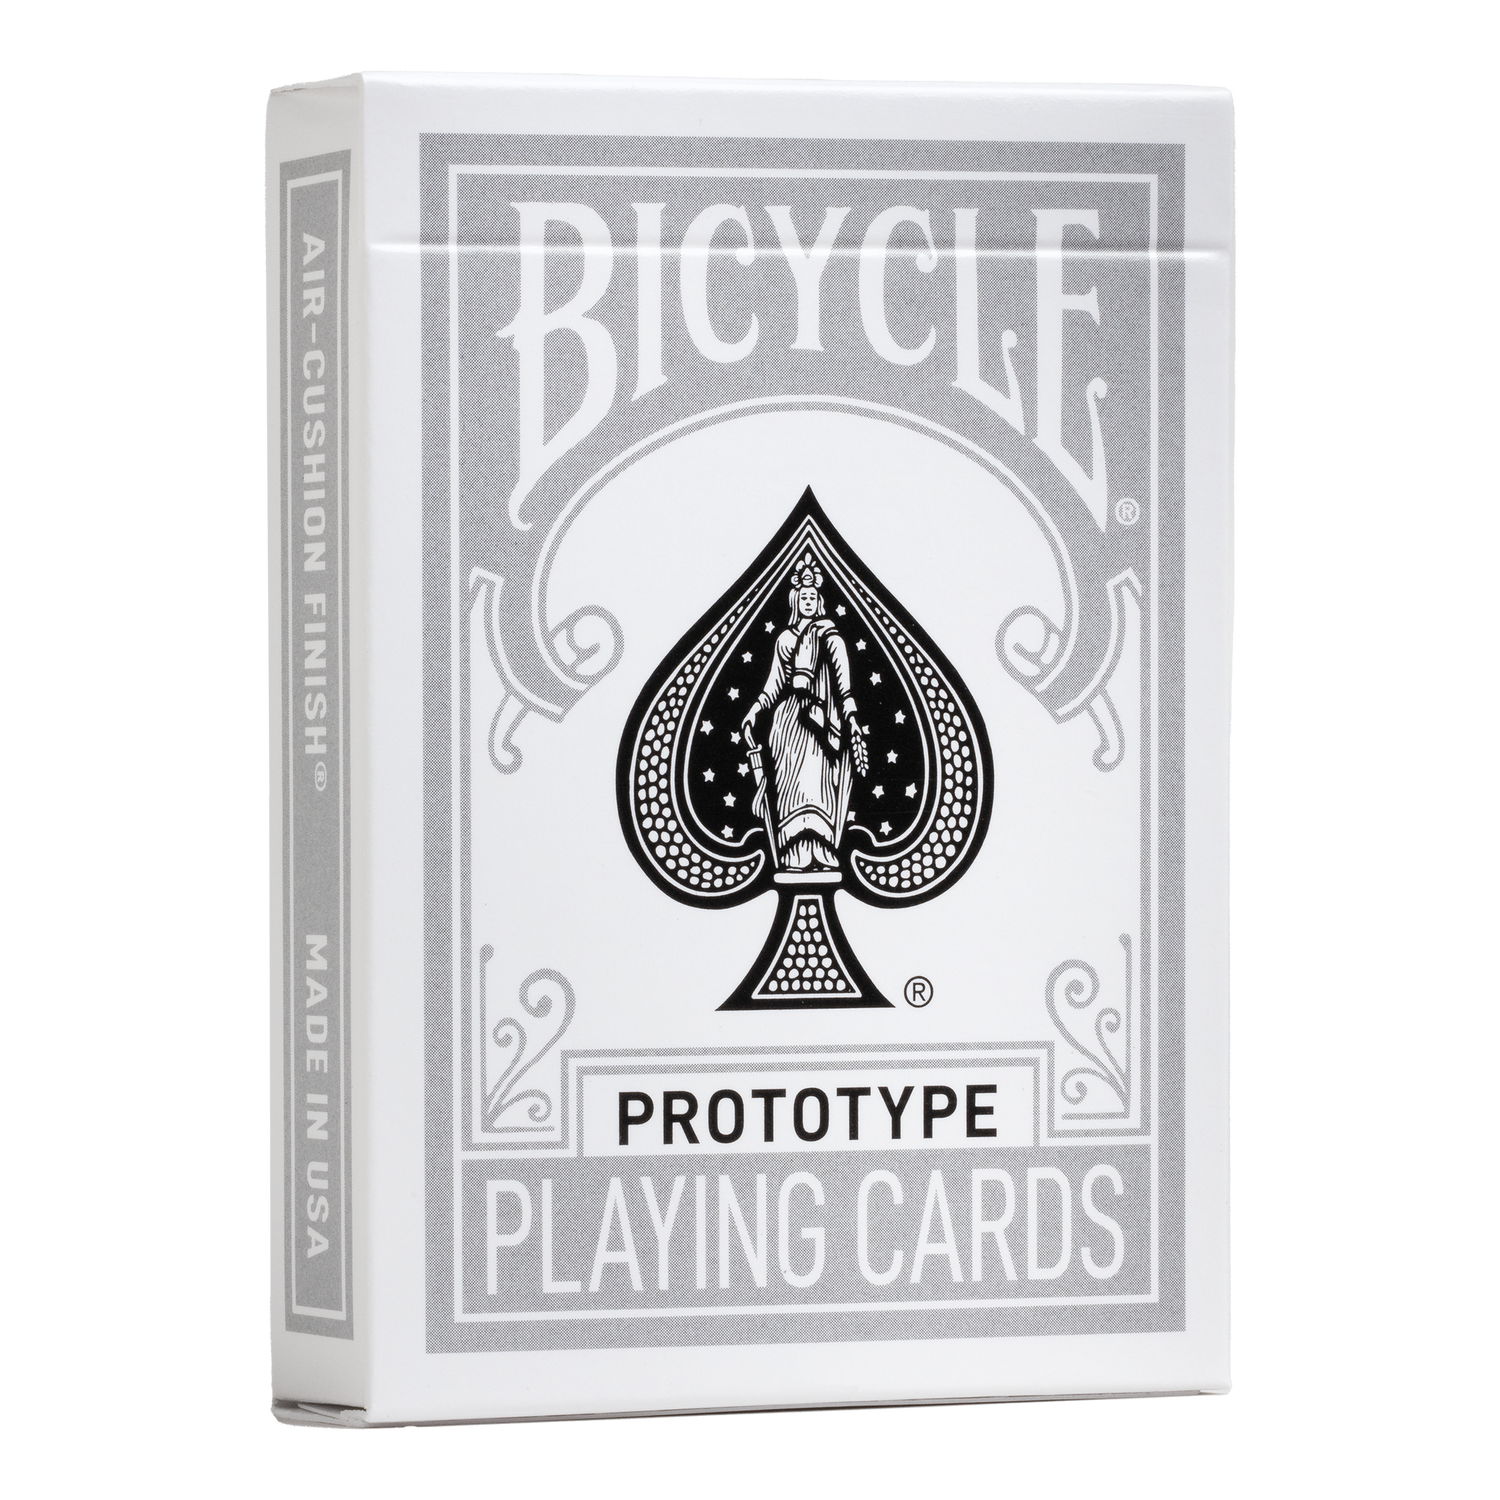 Bicycle Iridescent Cold Foil Prototype Deck Cardtopia